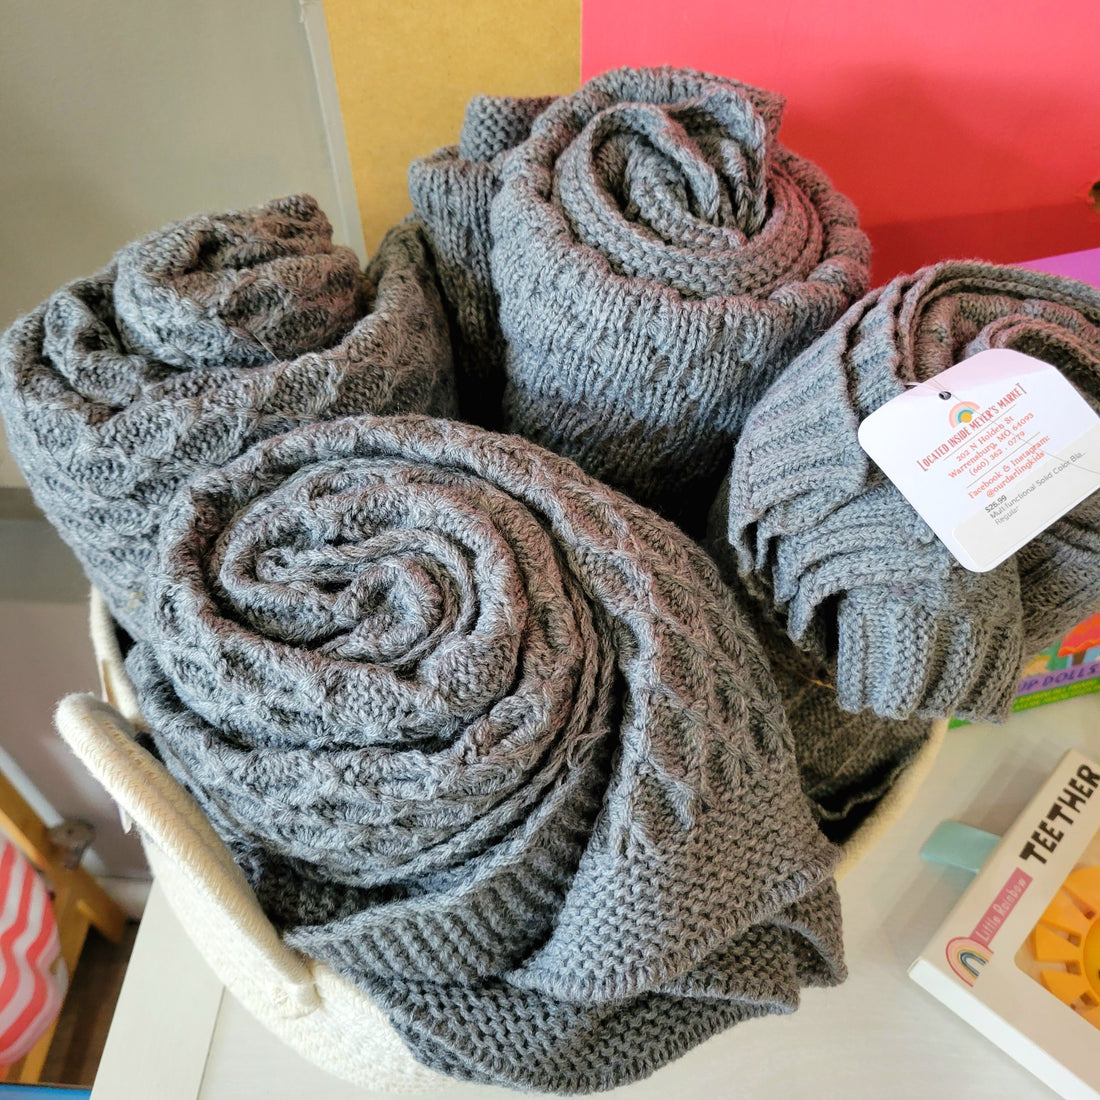 Grey Knit Blanket - That's So Darling